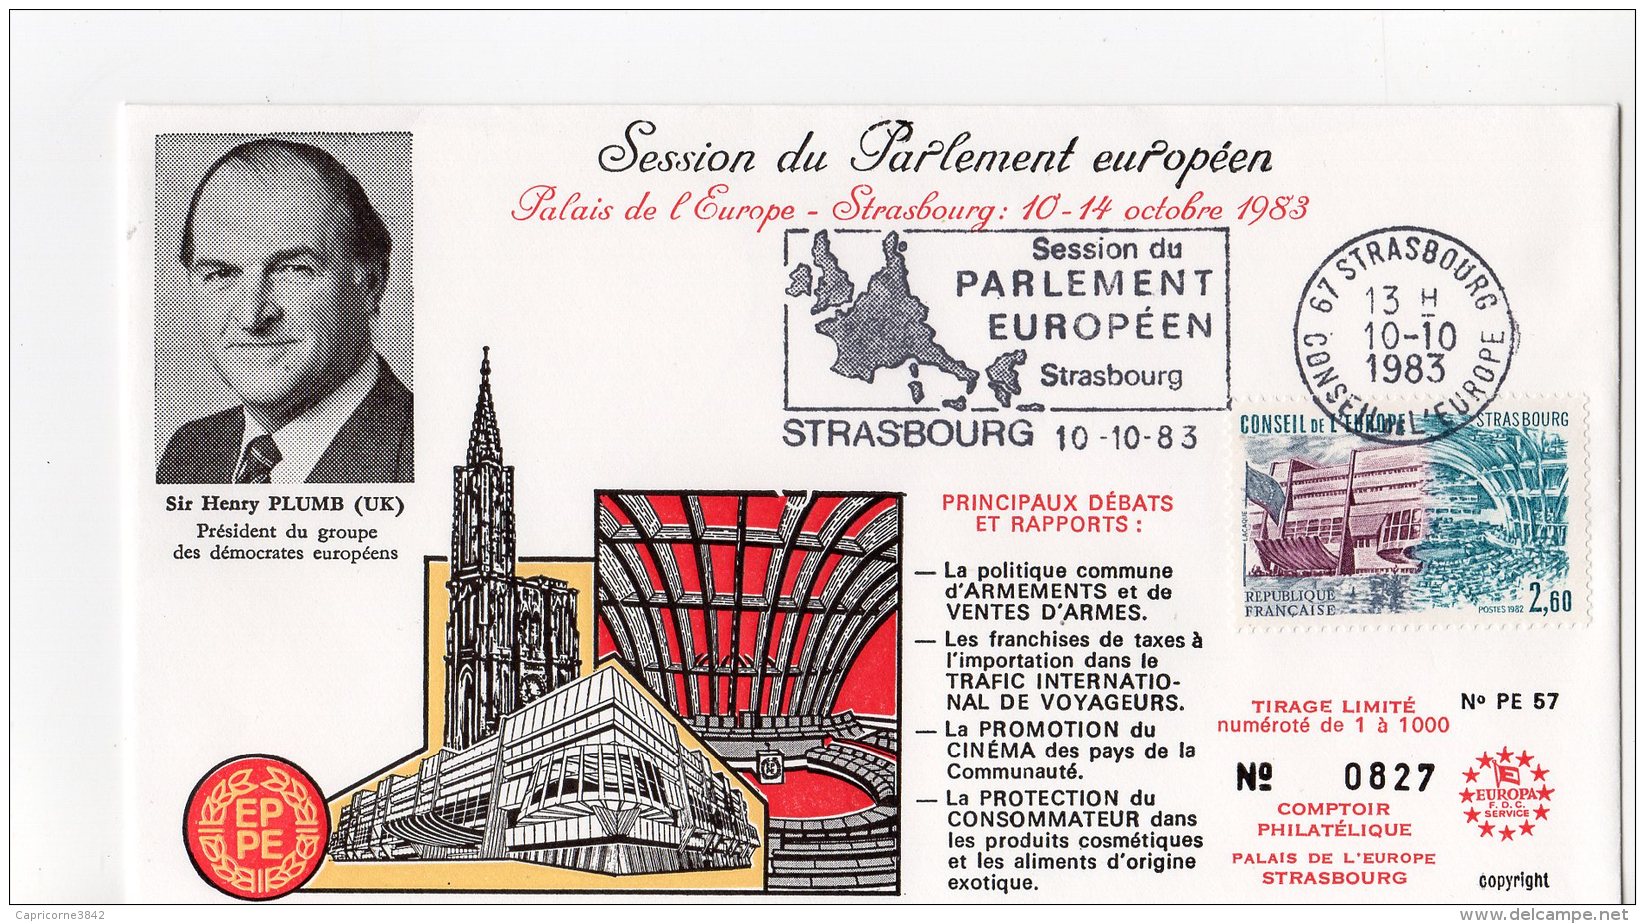 1983 - Strasbourg - Conseil De L'Europe - Parlement Européen - Sir Henry PLUMB - Pdt Du Groupe Des Démocrates Européens - Europese Instellingen